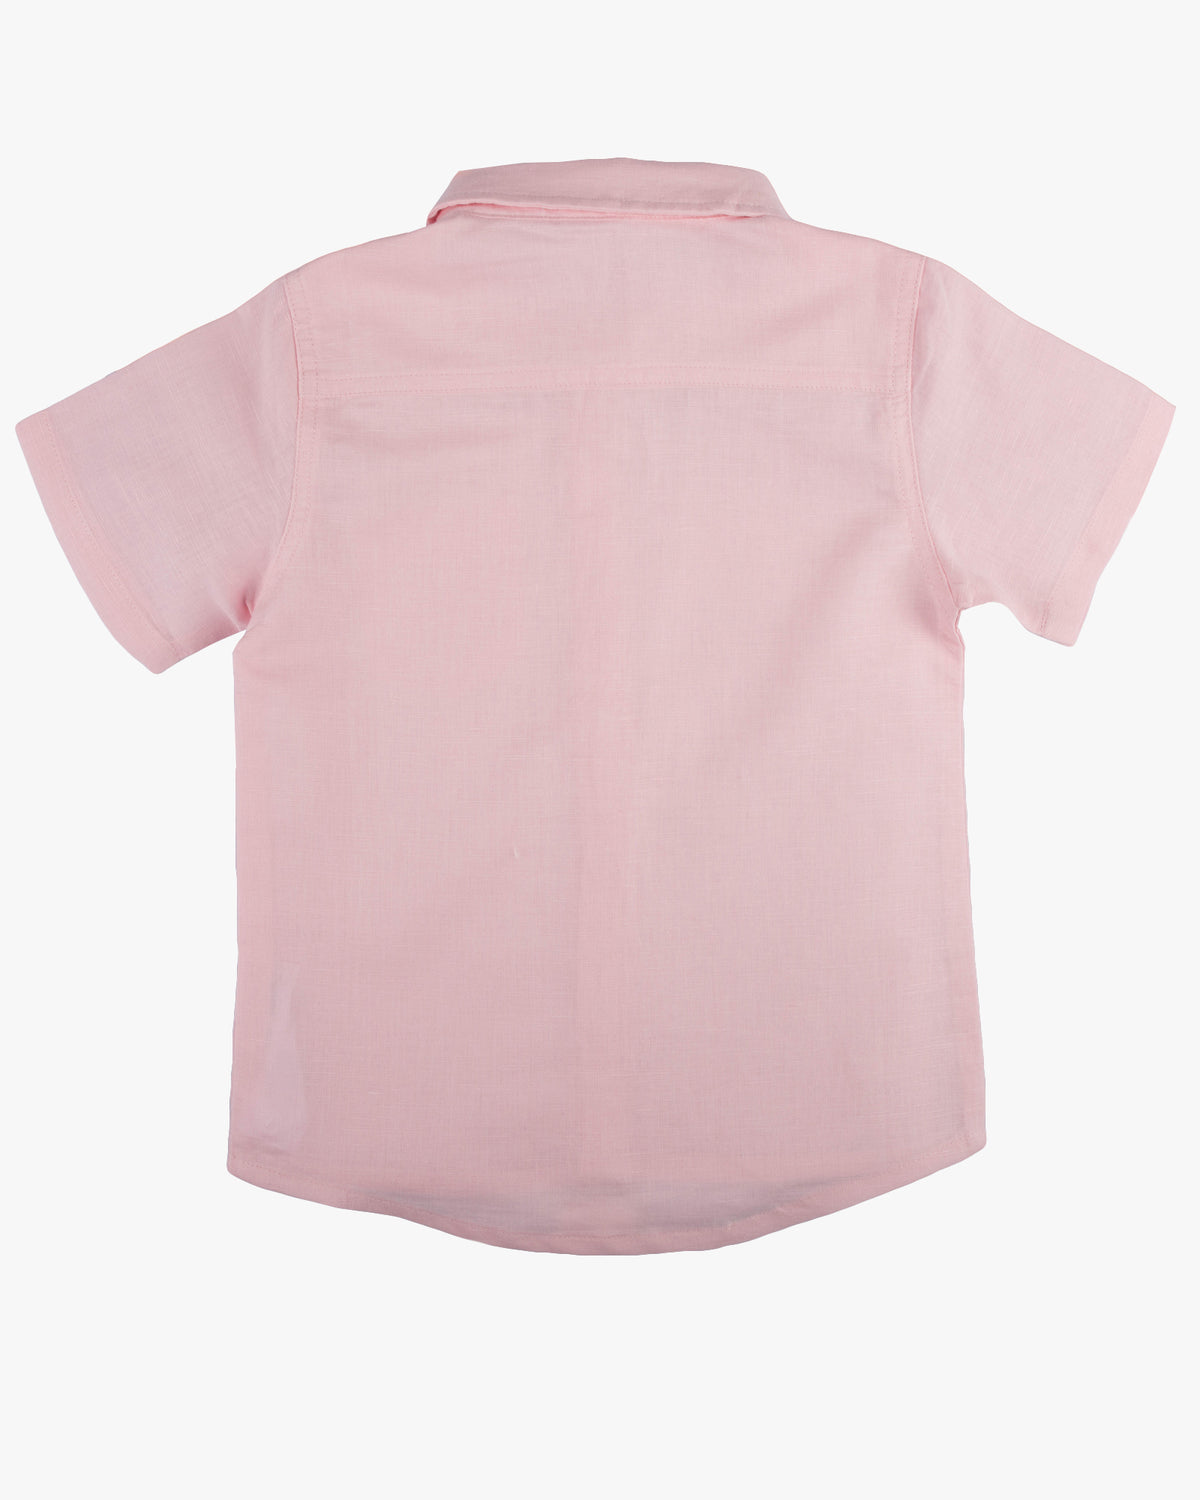 Linen Shirt pale pink back